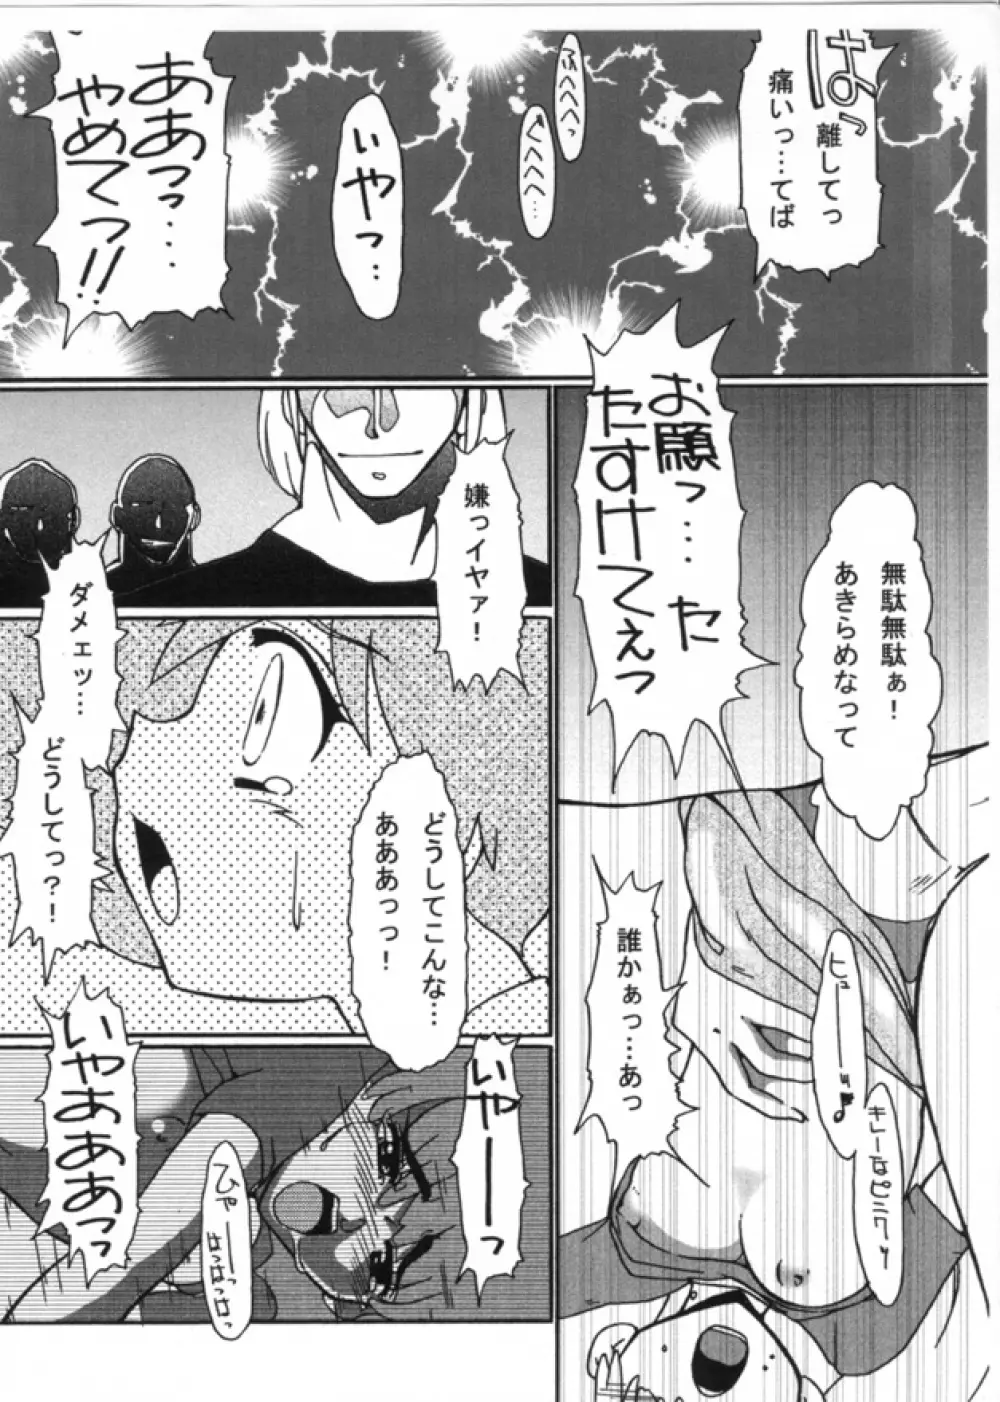 KASUMIX XPLOSION Kasumi Comic part5 - page36